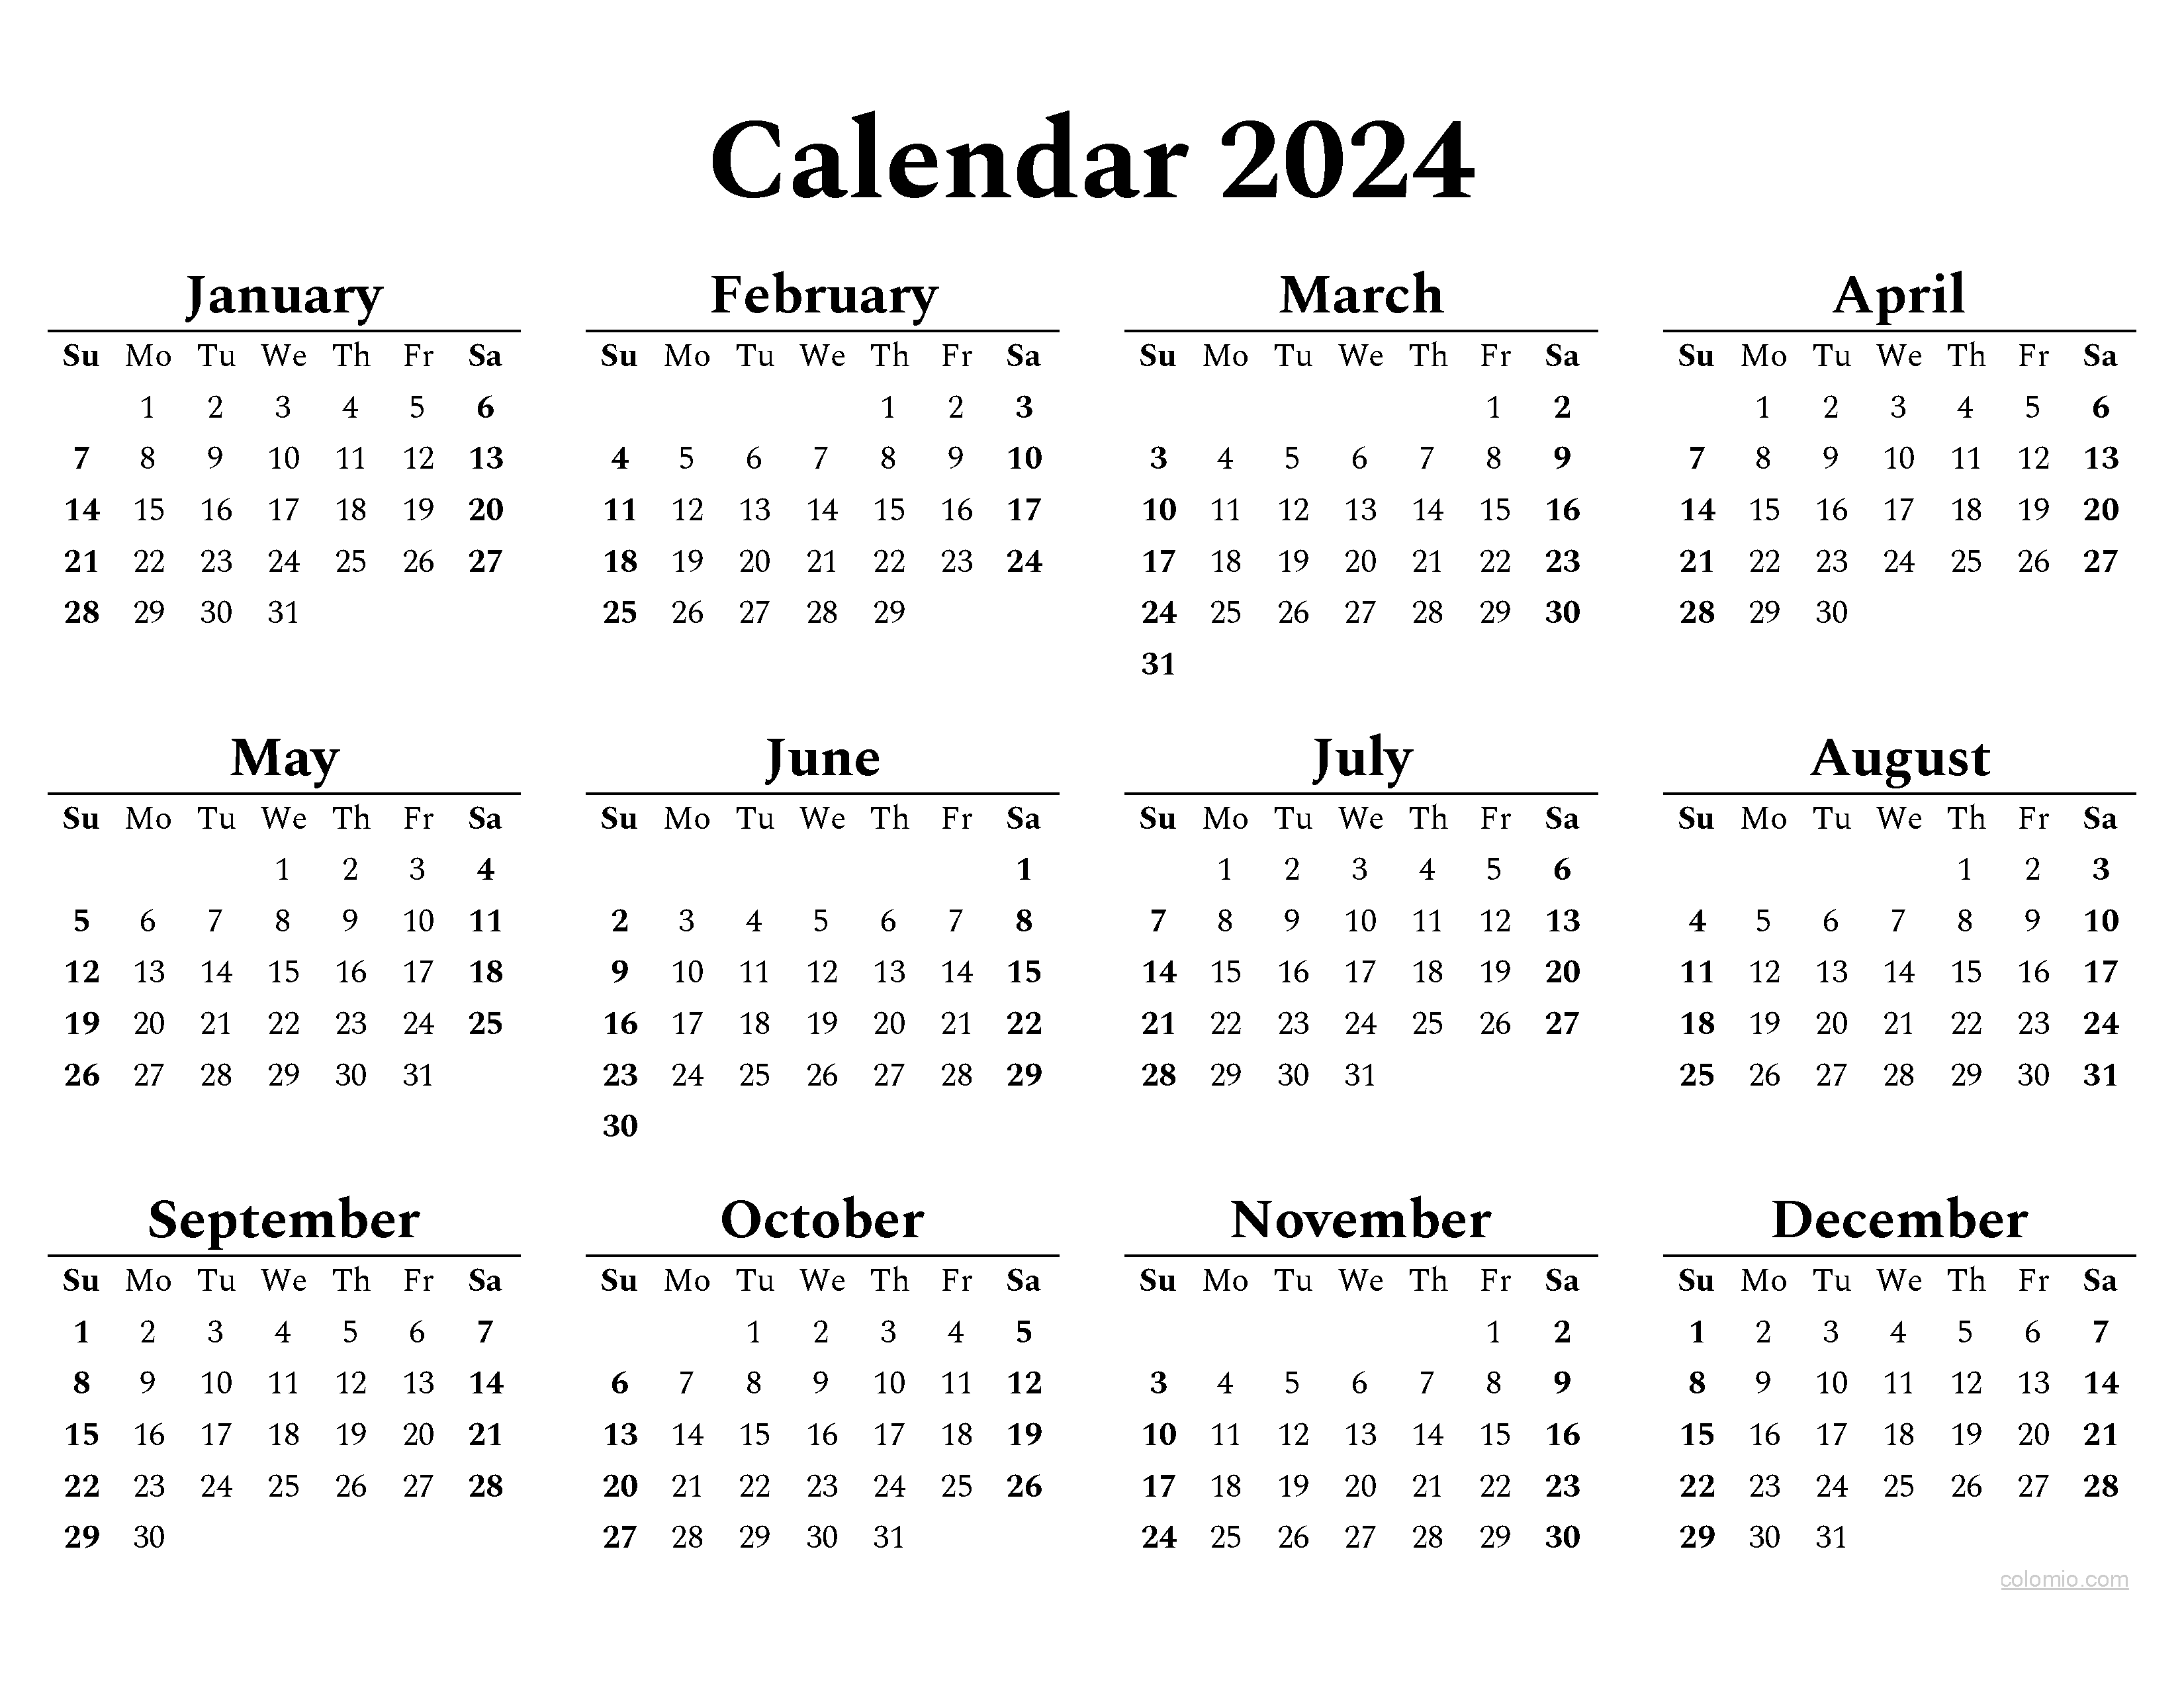 Calendar 2024 Template Pdf Fina Orelle - Free Printable 2024 Calendar By Month July